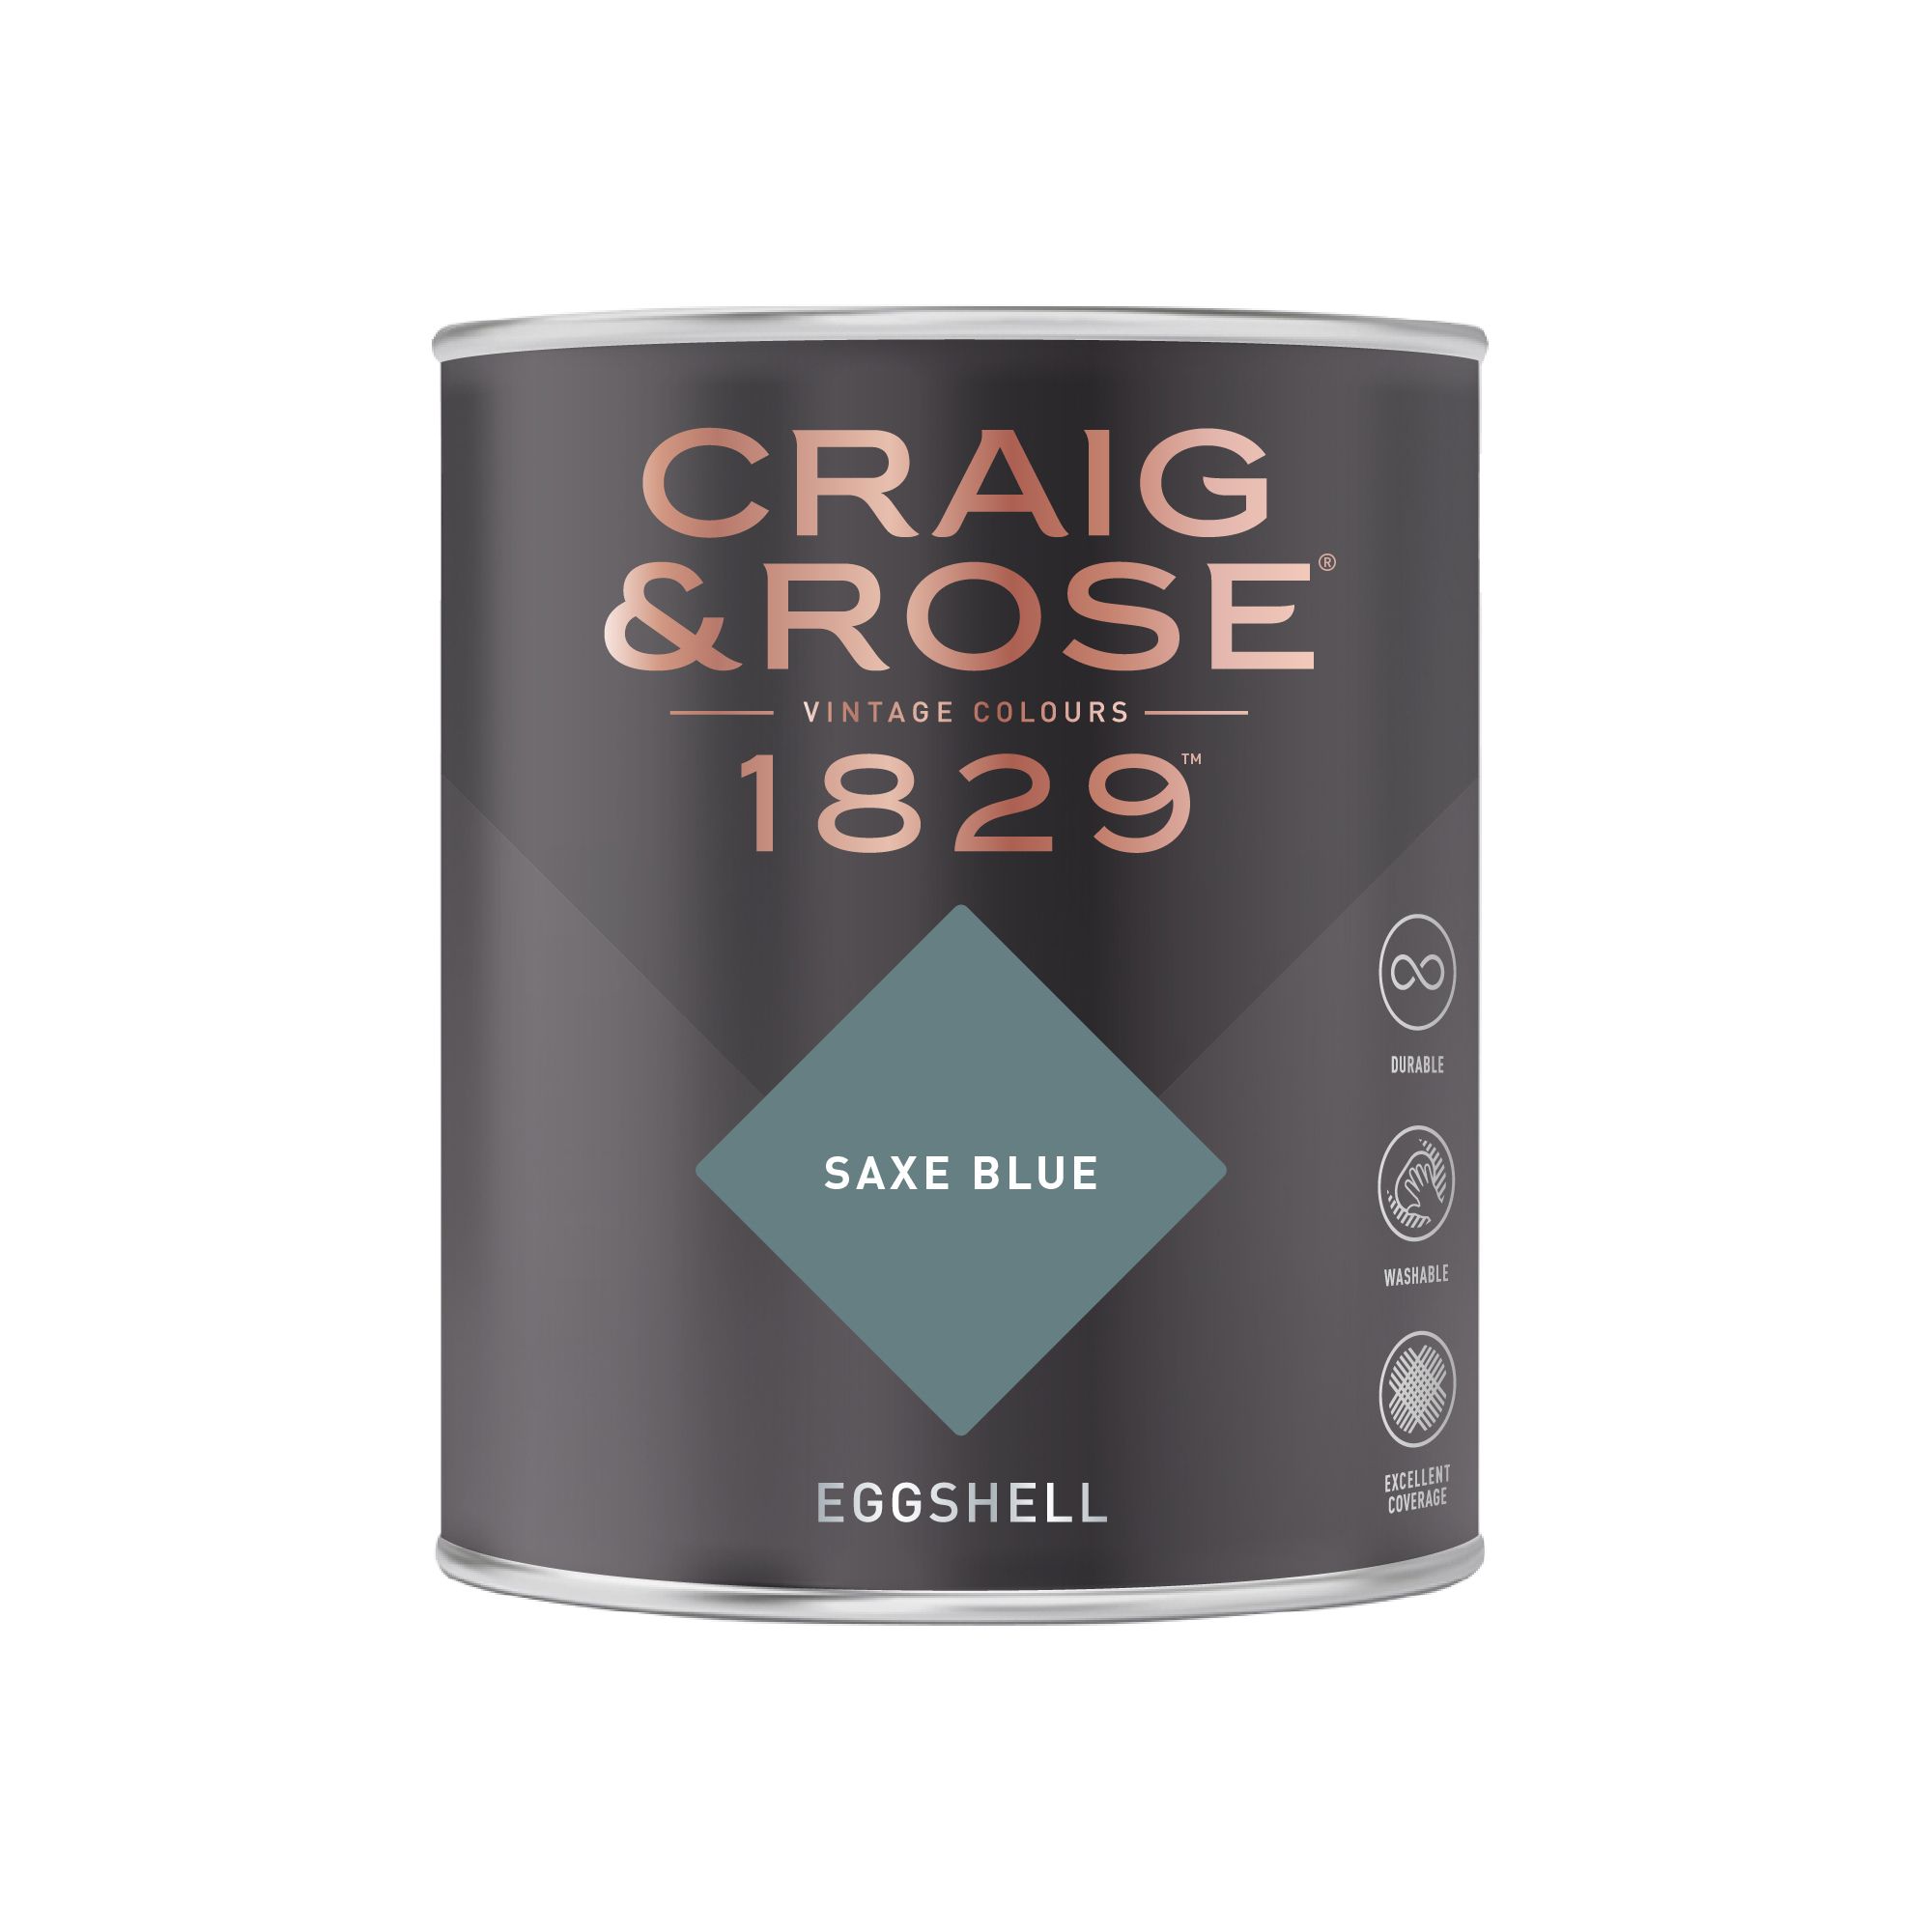 Craig & Rose 1829 Saxe Blue Eggshell Wall paint, 750ml